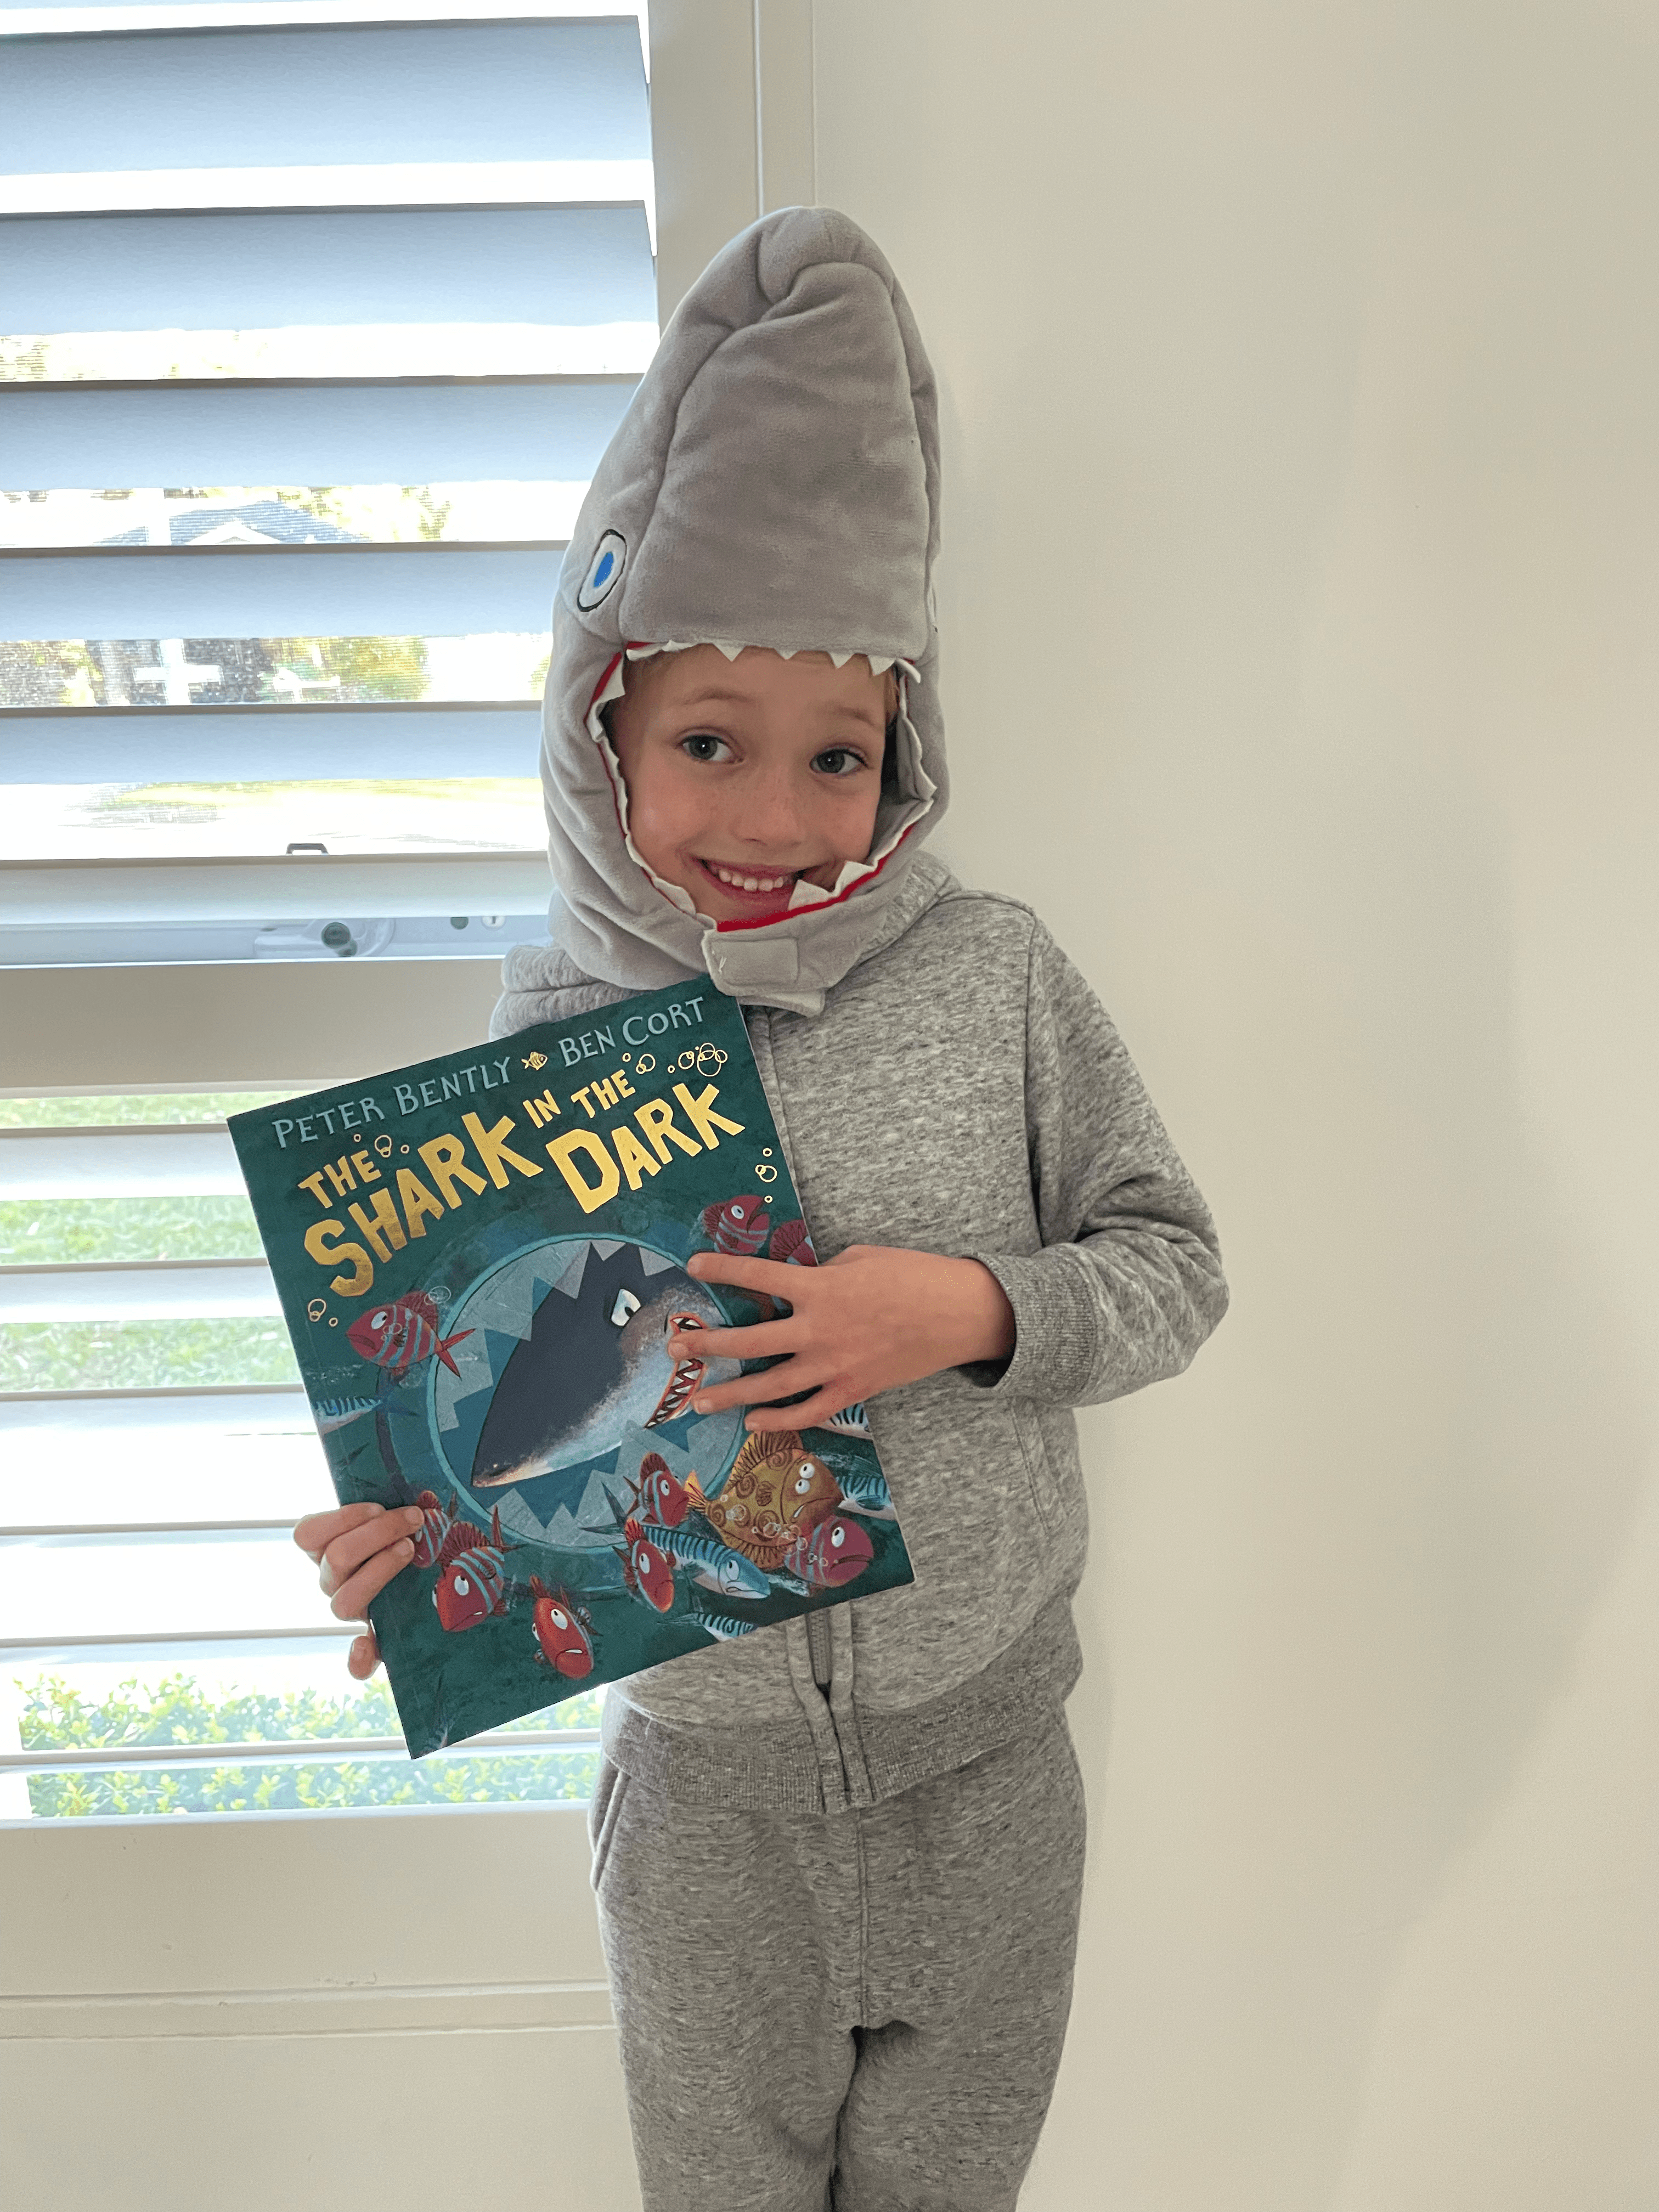 Shark-book-week-costume